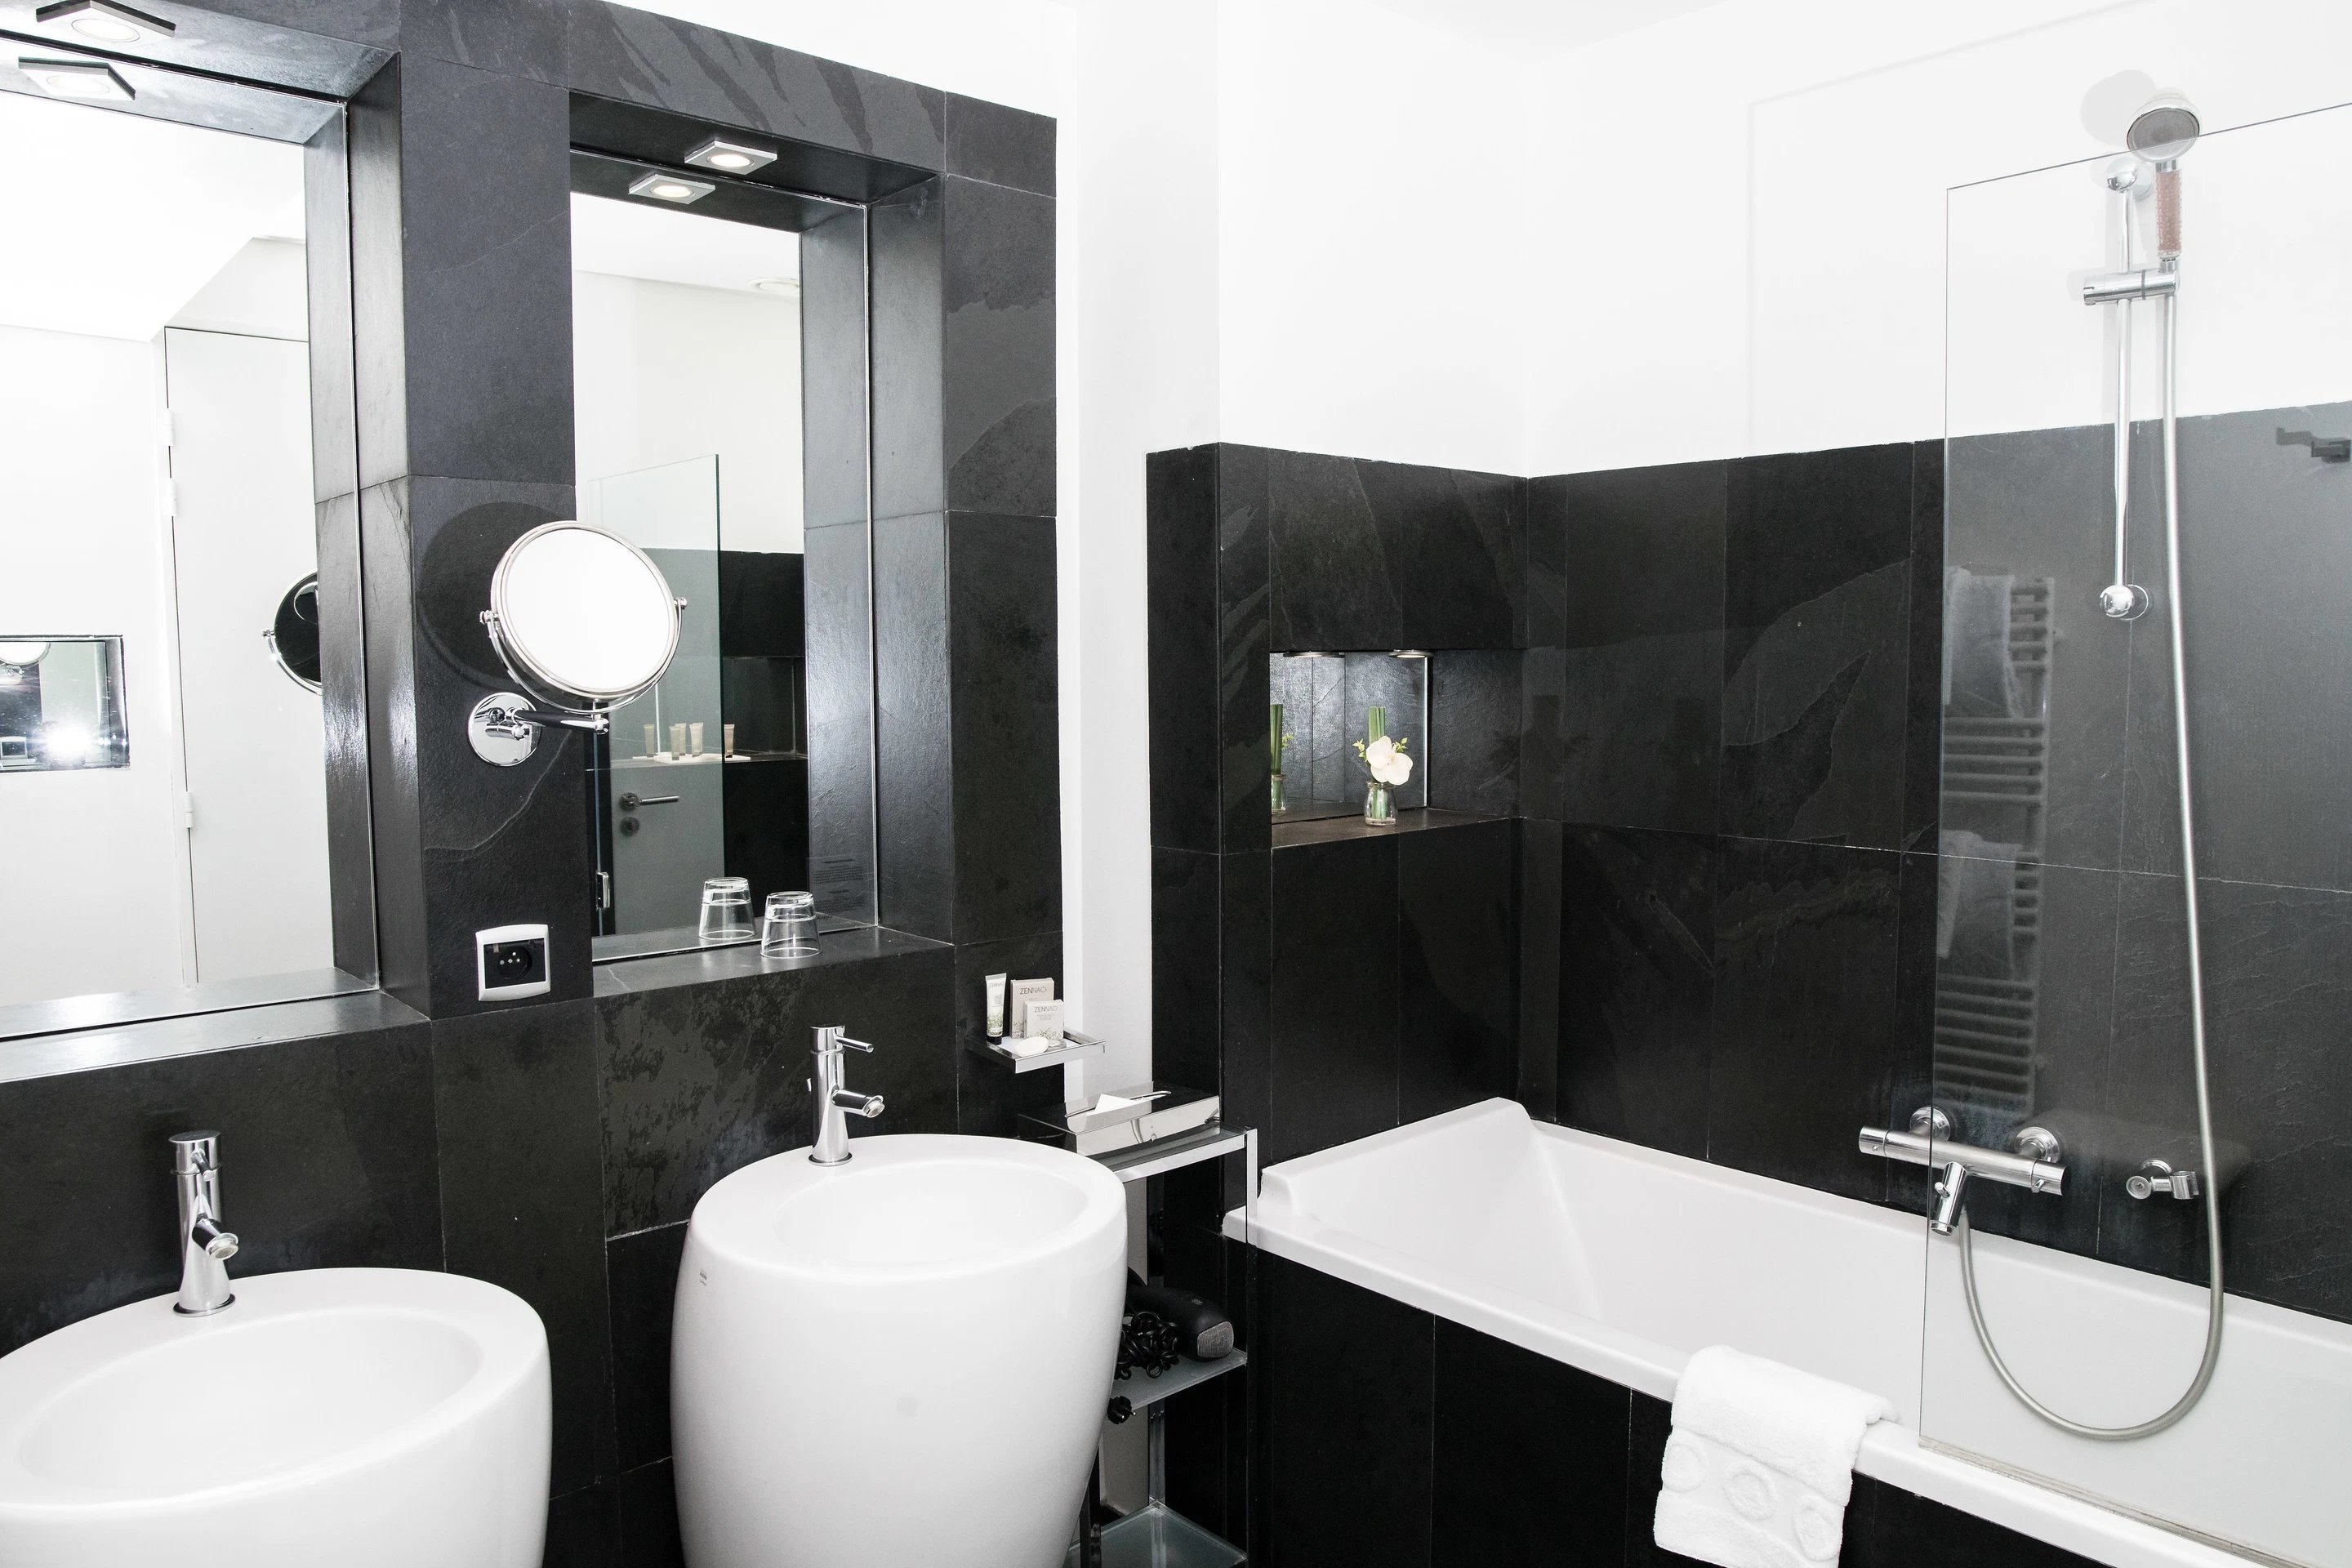 1K Paris - XL Duplex Room - Bathroom